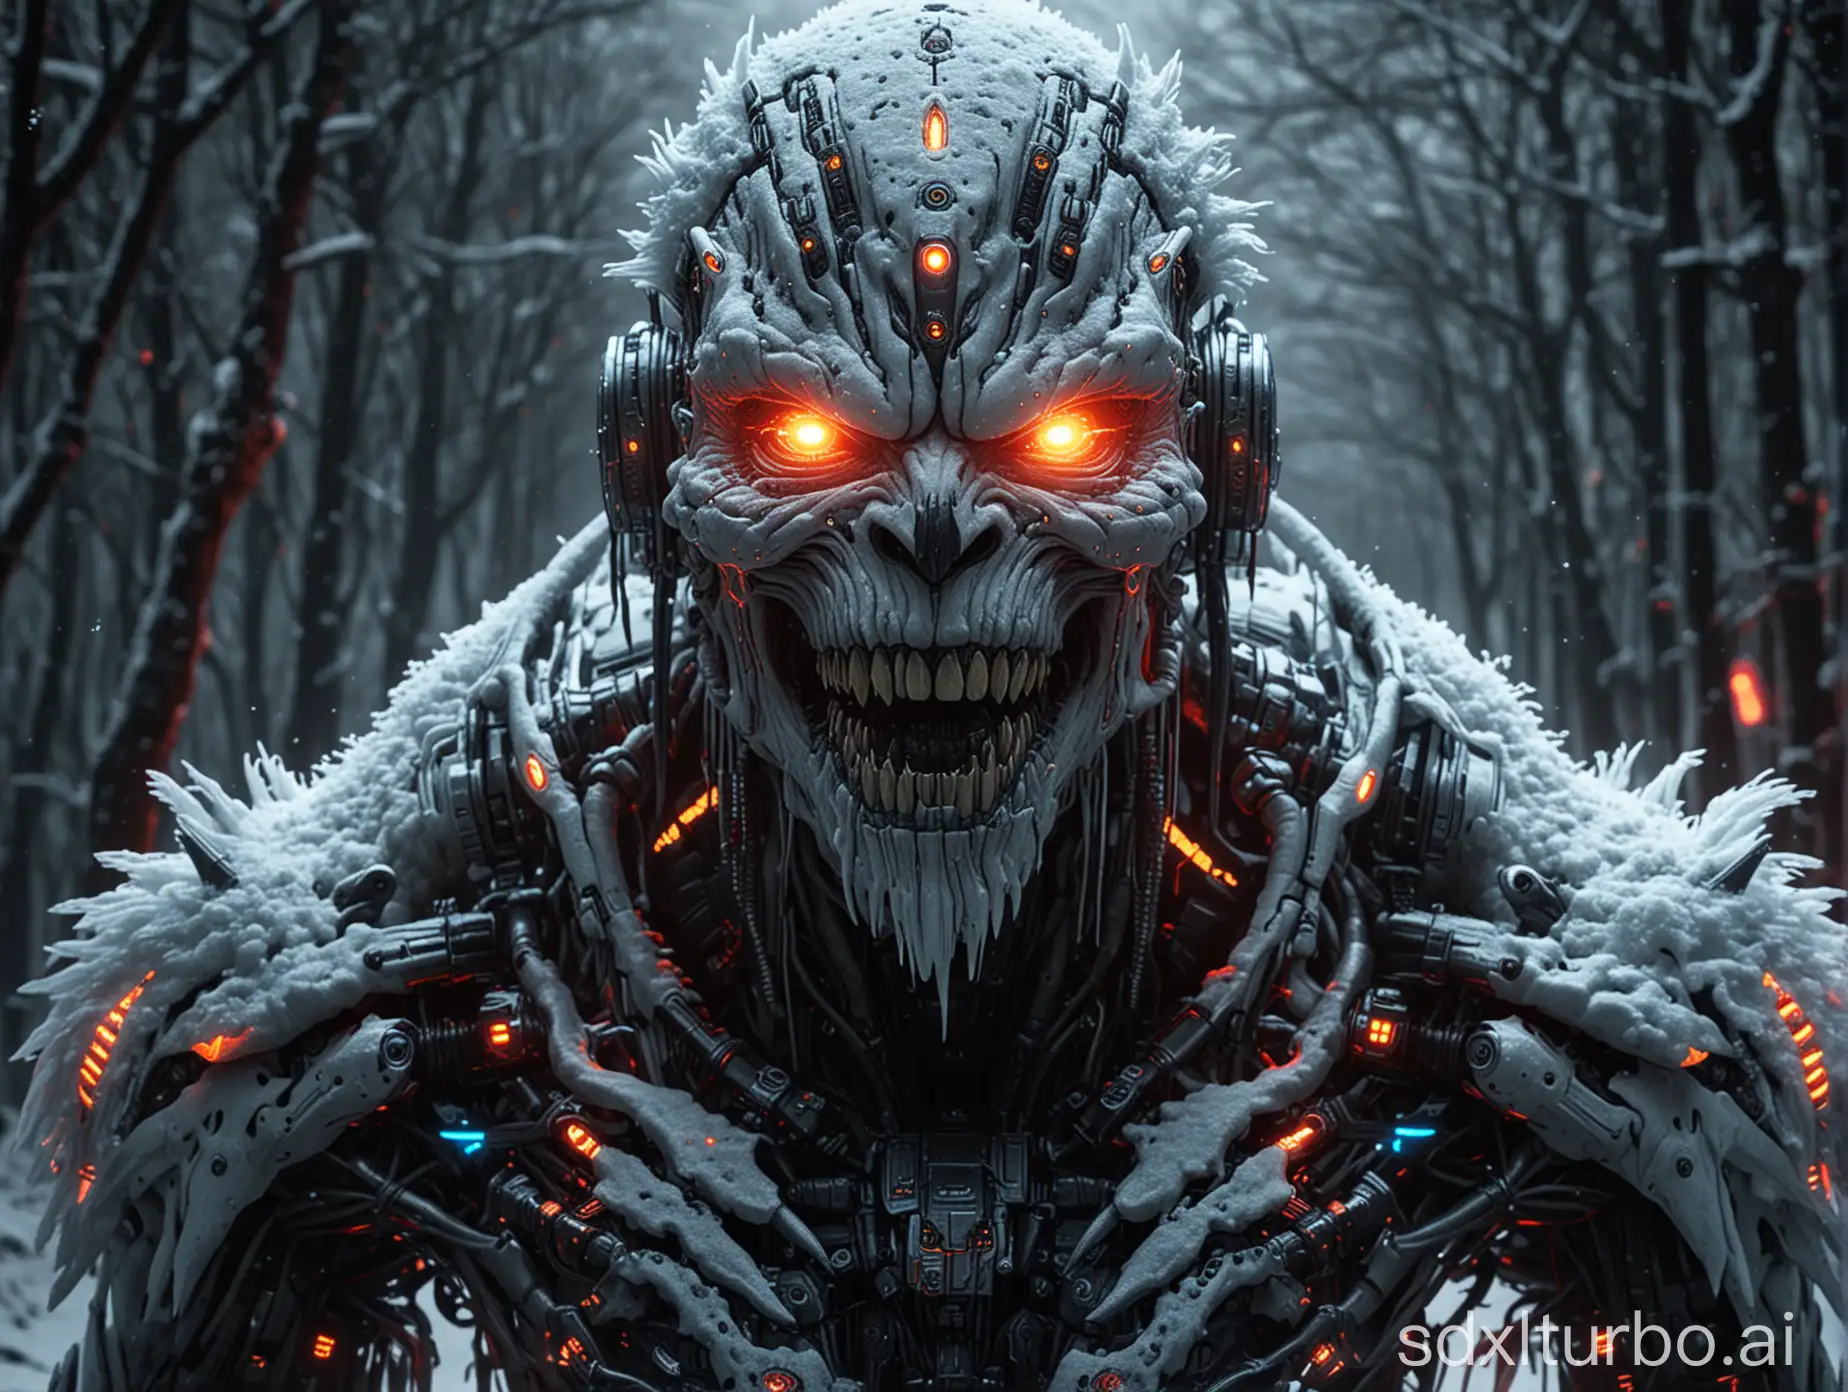 Cyberpunk-Snow-Monster-Horrifying-Dystopian-Forest-Nightmare